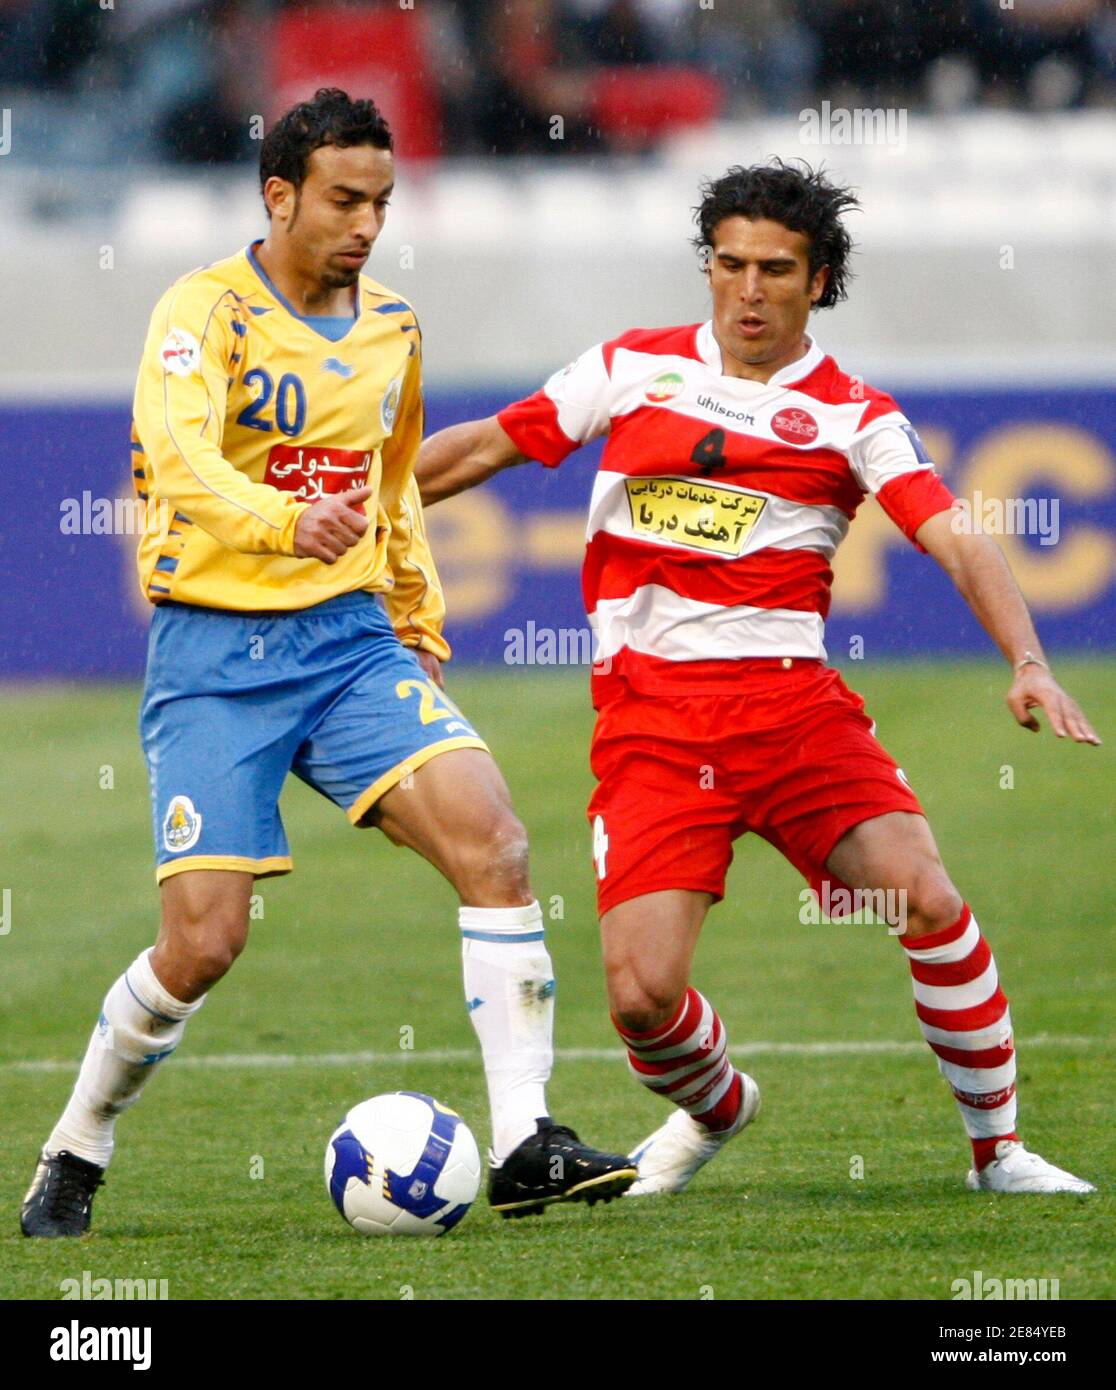 Alireza Mohammad (R) of Iran's Piroozi fights for the ball with Otman El Assas of Qatar's Al-Gharafa during their AFC Champions League soccer match at Tehran's Azadi stadium April 8, 2009. REUTERS/Raheb Homavandi (IRAN SPORT SOCCER) Stock Photo